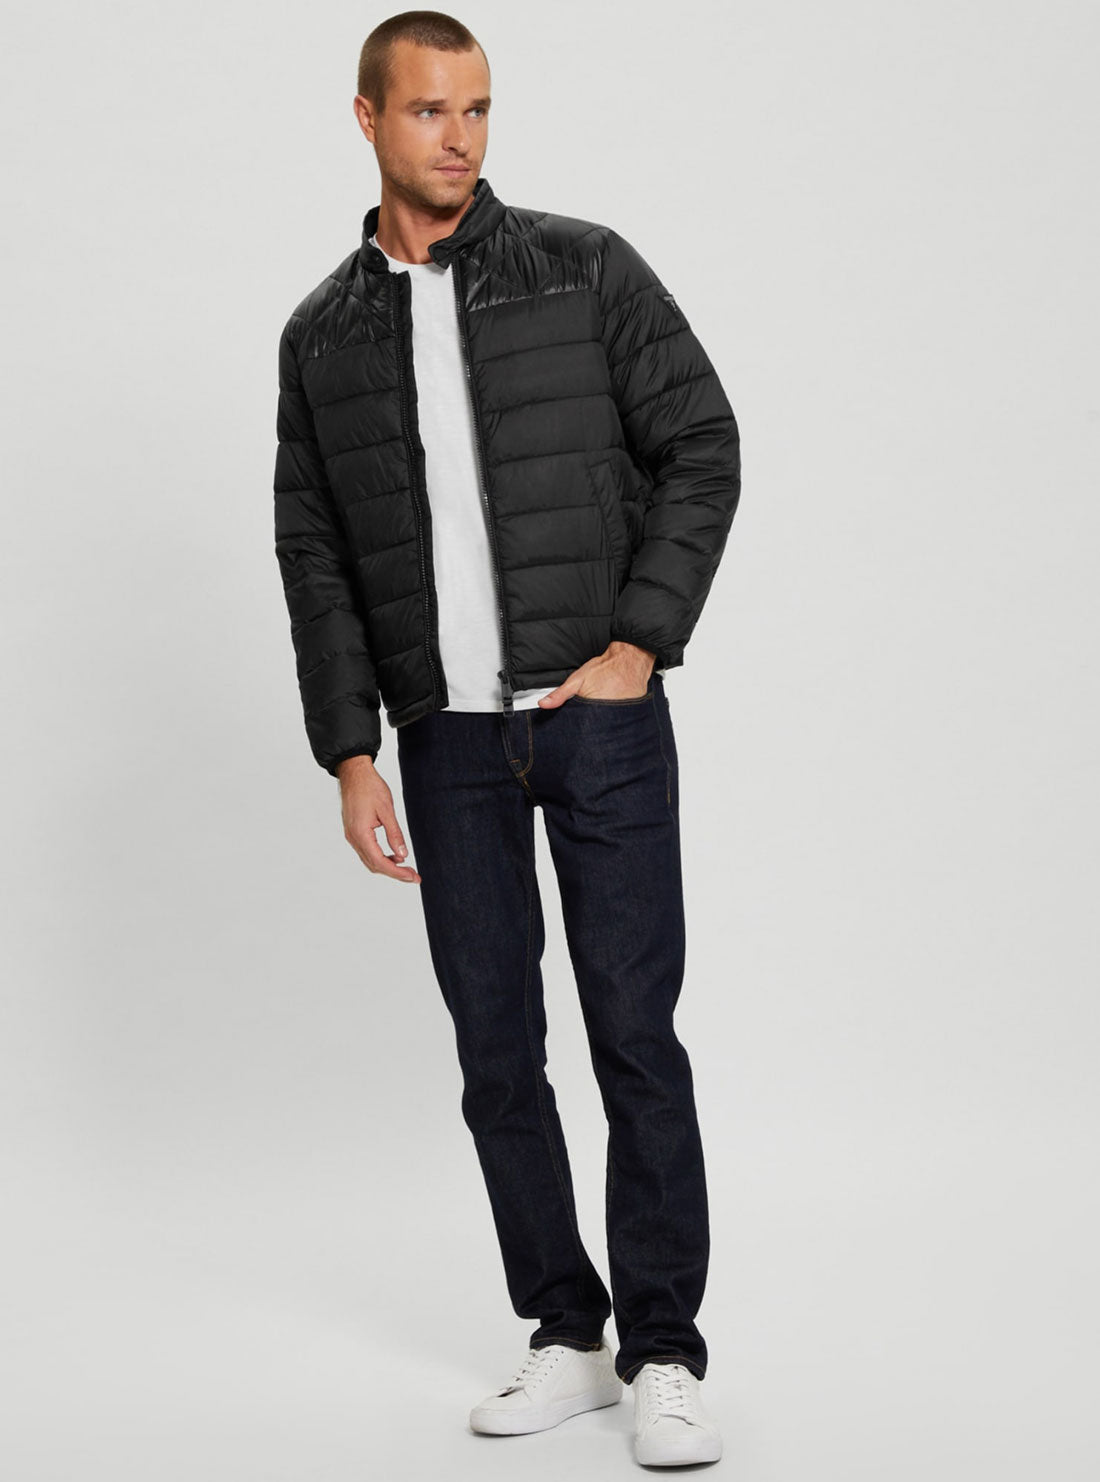 Eco Black Lightweight Puffer Jacket | GUESS Men's Apparel | full view